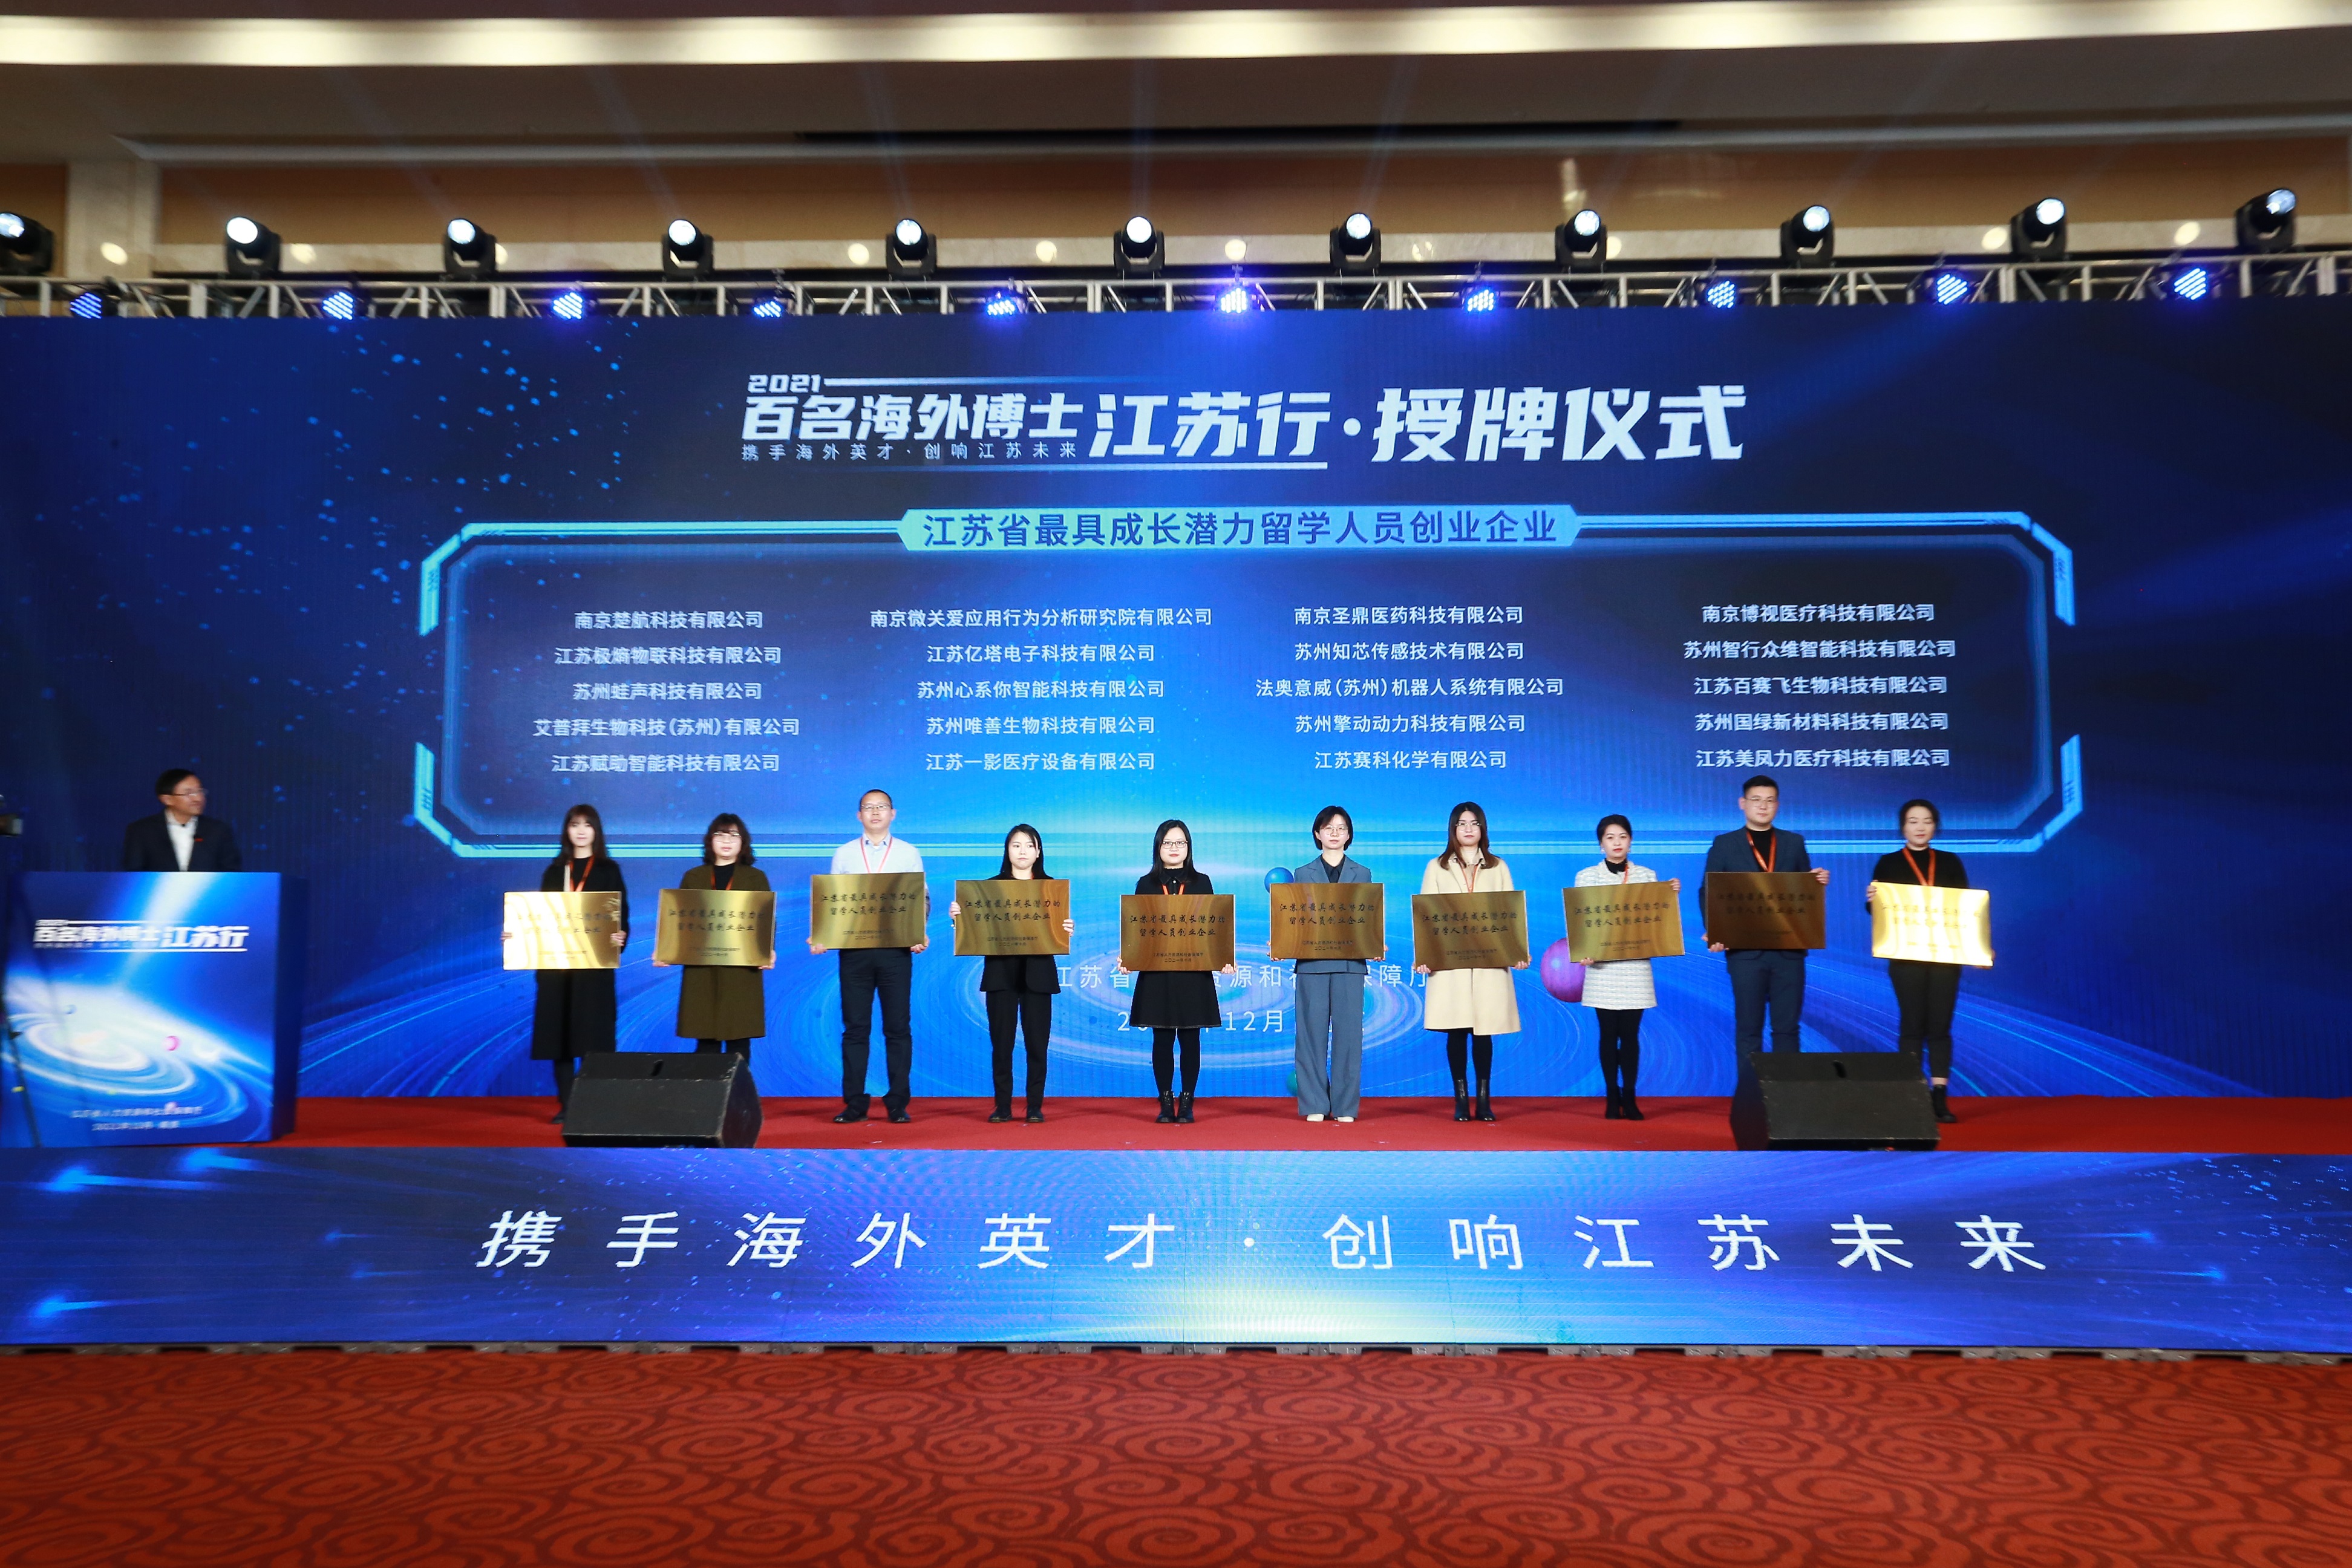 8188cc威尼斯参加"江苏省最具成长潜力留学人员创业企业”授牌仪式